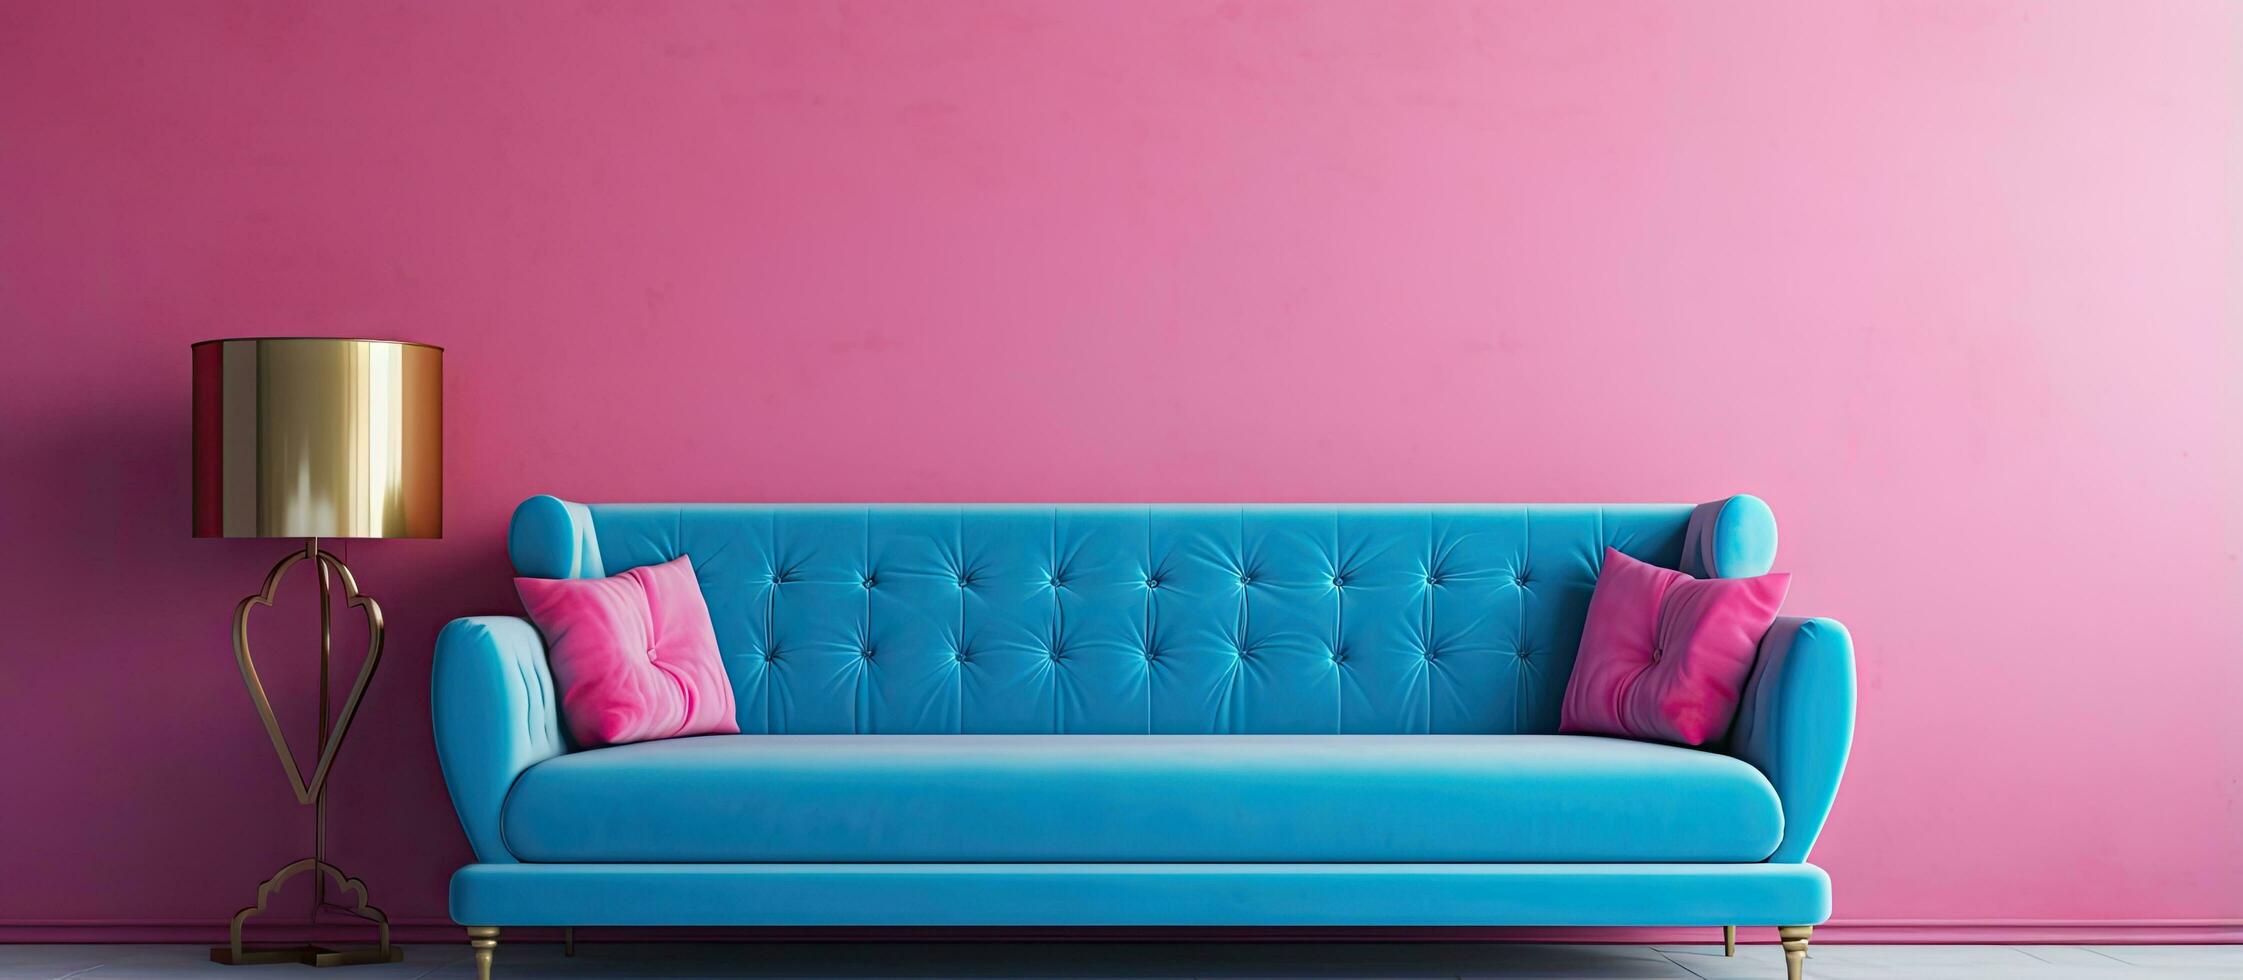 de levande rum har en rosa soffa med en blå kudde foto